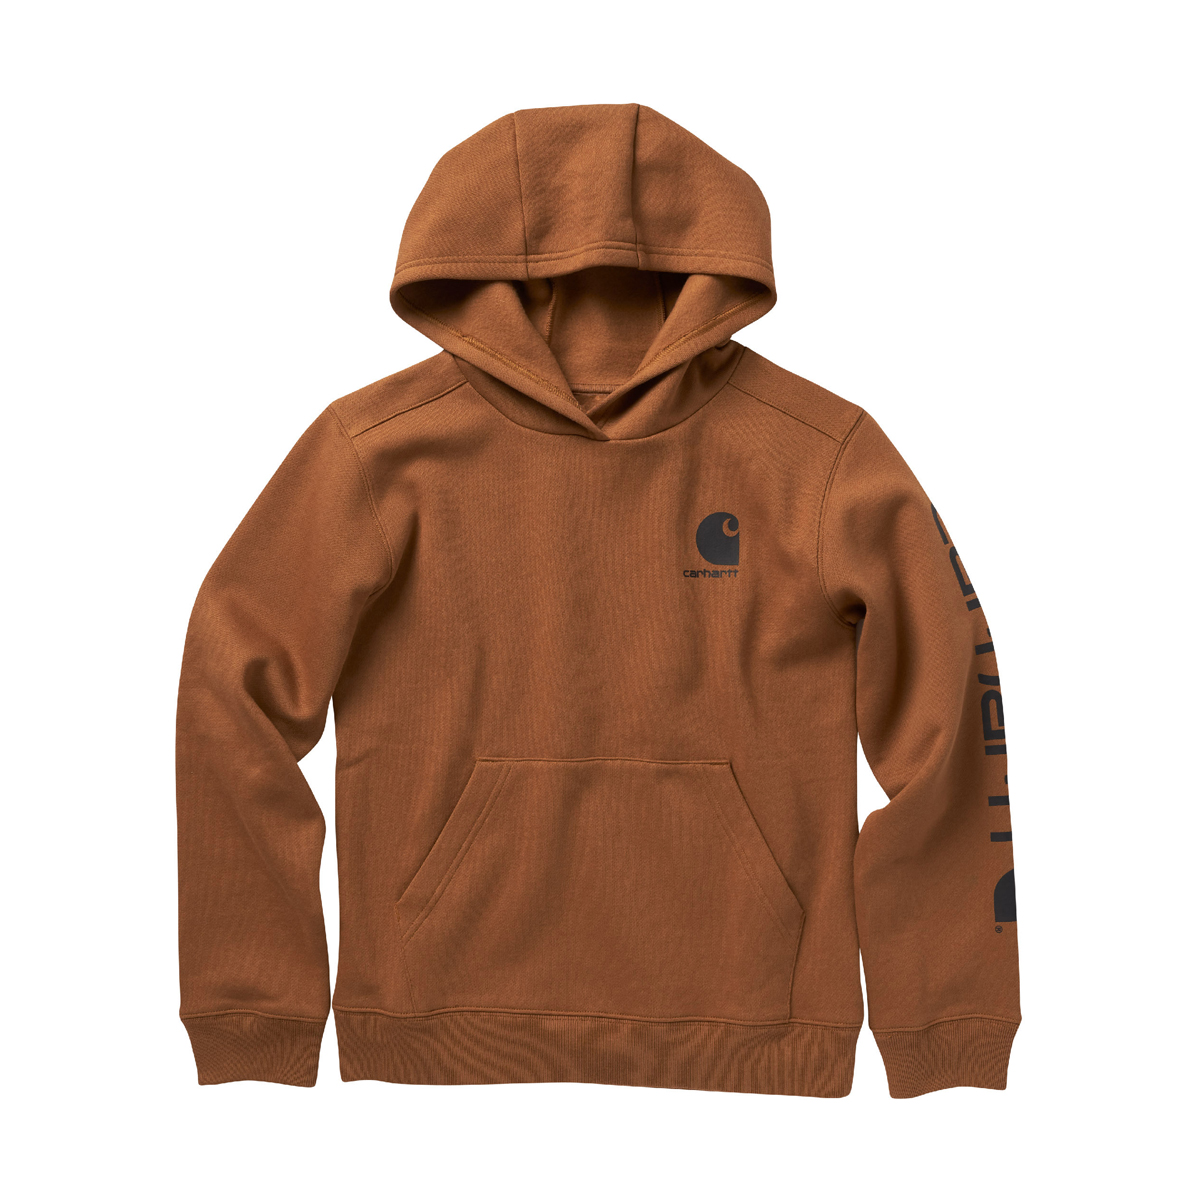 Carhartt Kid's Long-Sleeve Graphic Sweatshirt - Brown